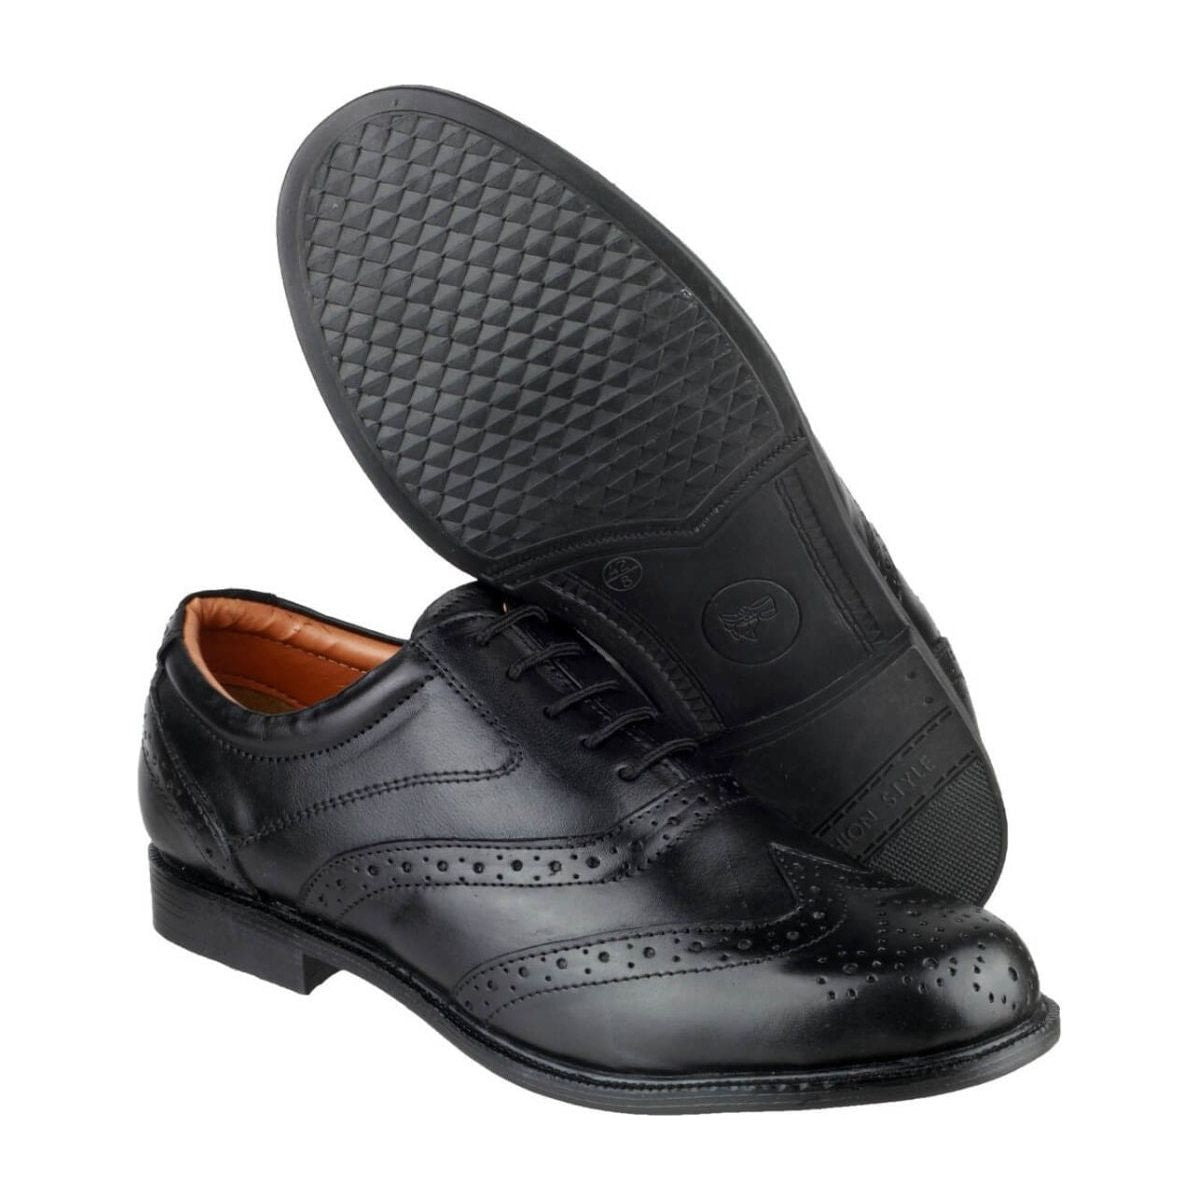 Amblers Liverpool Oxford Brogue Shoes Mens - workweargurus.com